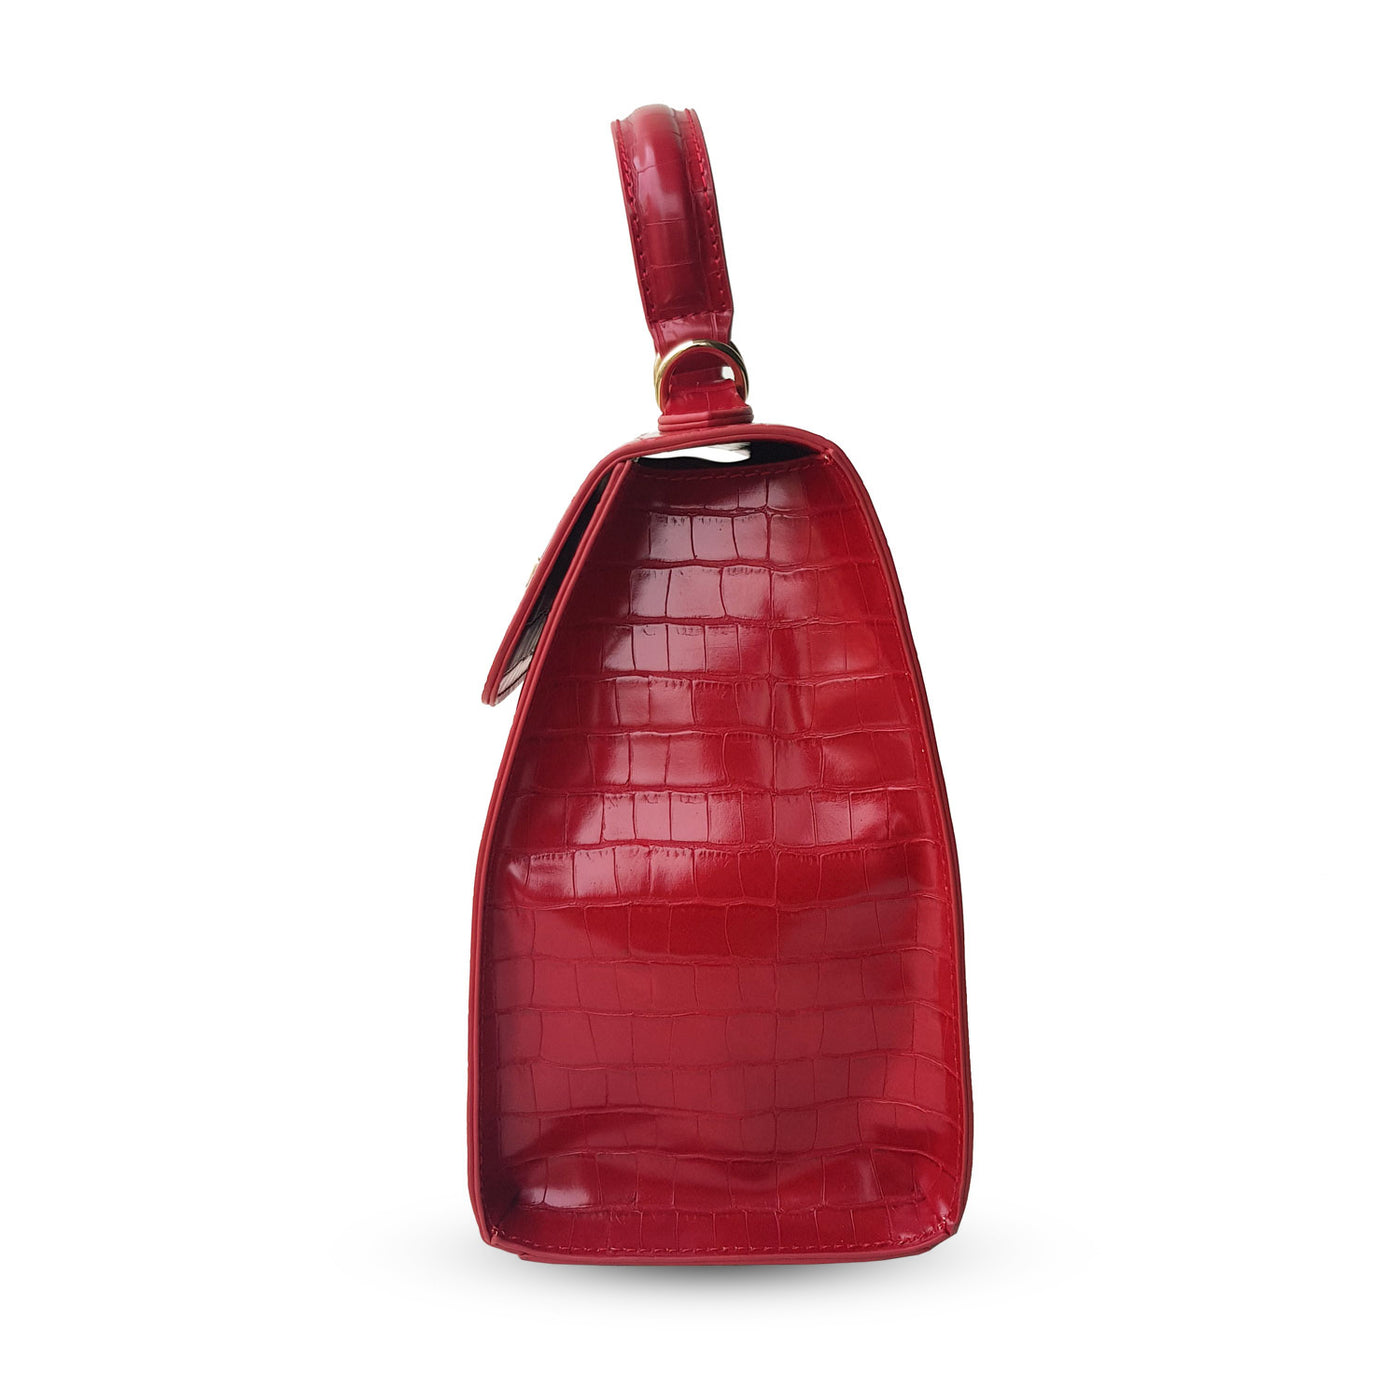 Charlie Stone Vintage Inspired Handbag Retro 1940’s 1950’s Style Rouge Red Croc Vegan leather